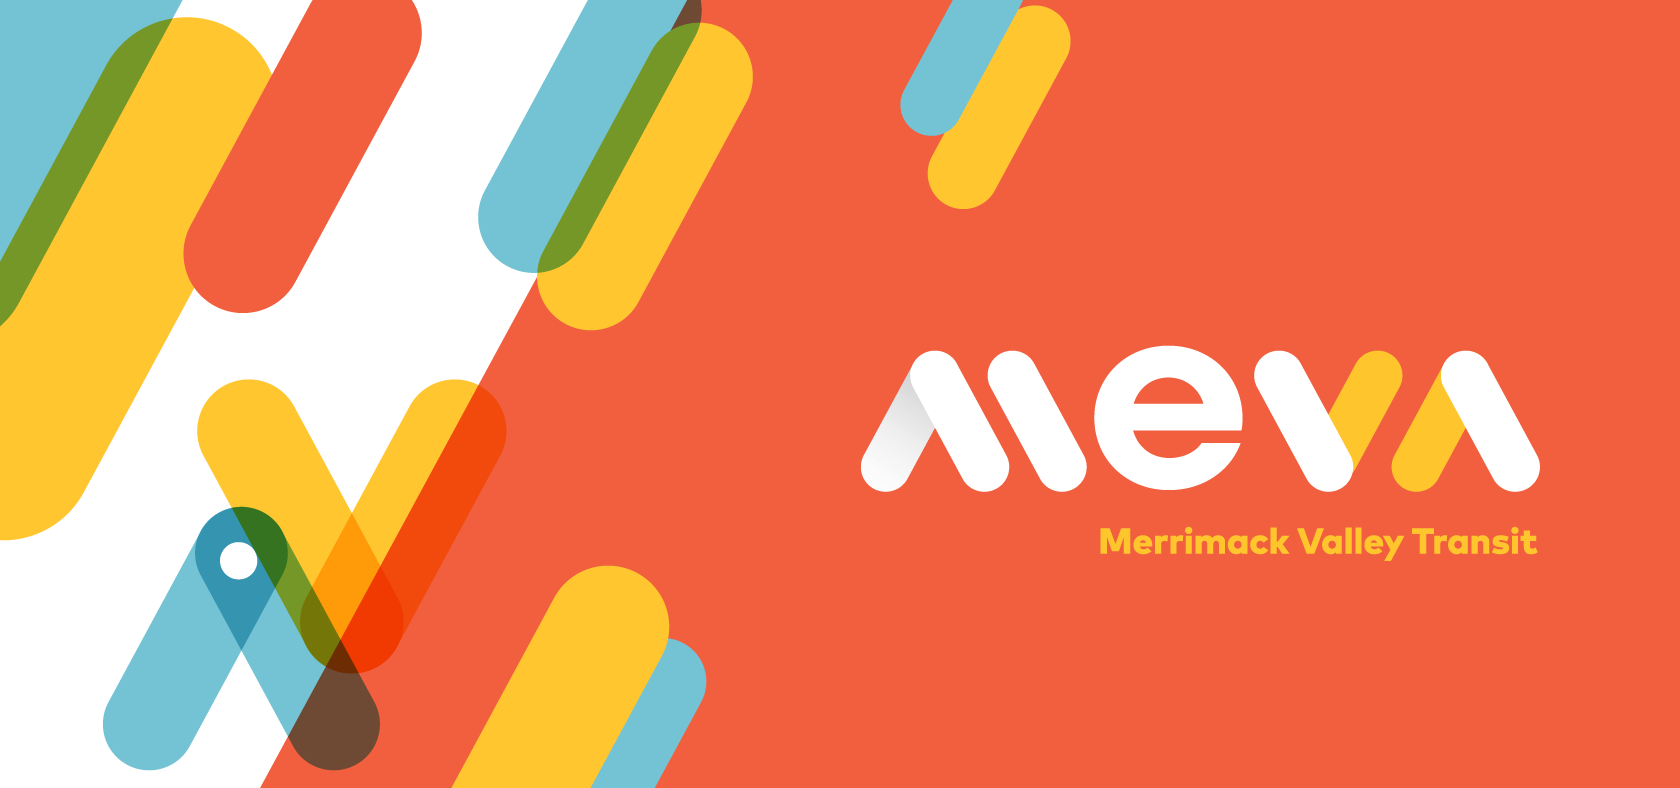 Meva, Merrimack Valley Transit logo on orange background with graphics